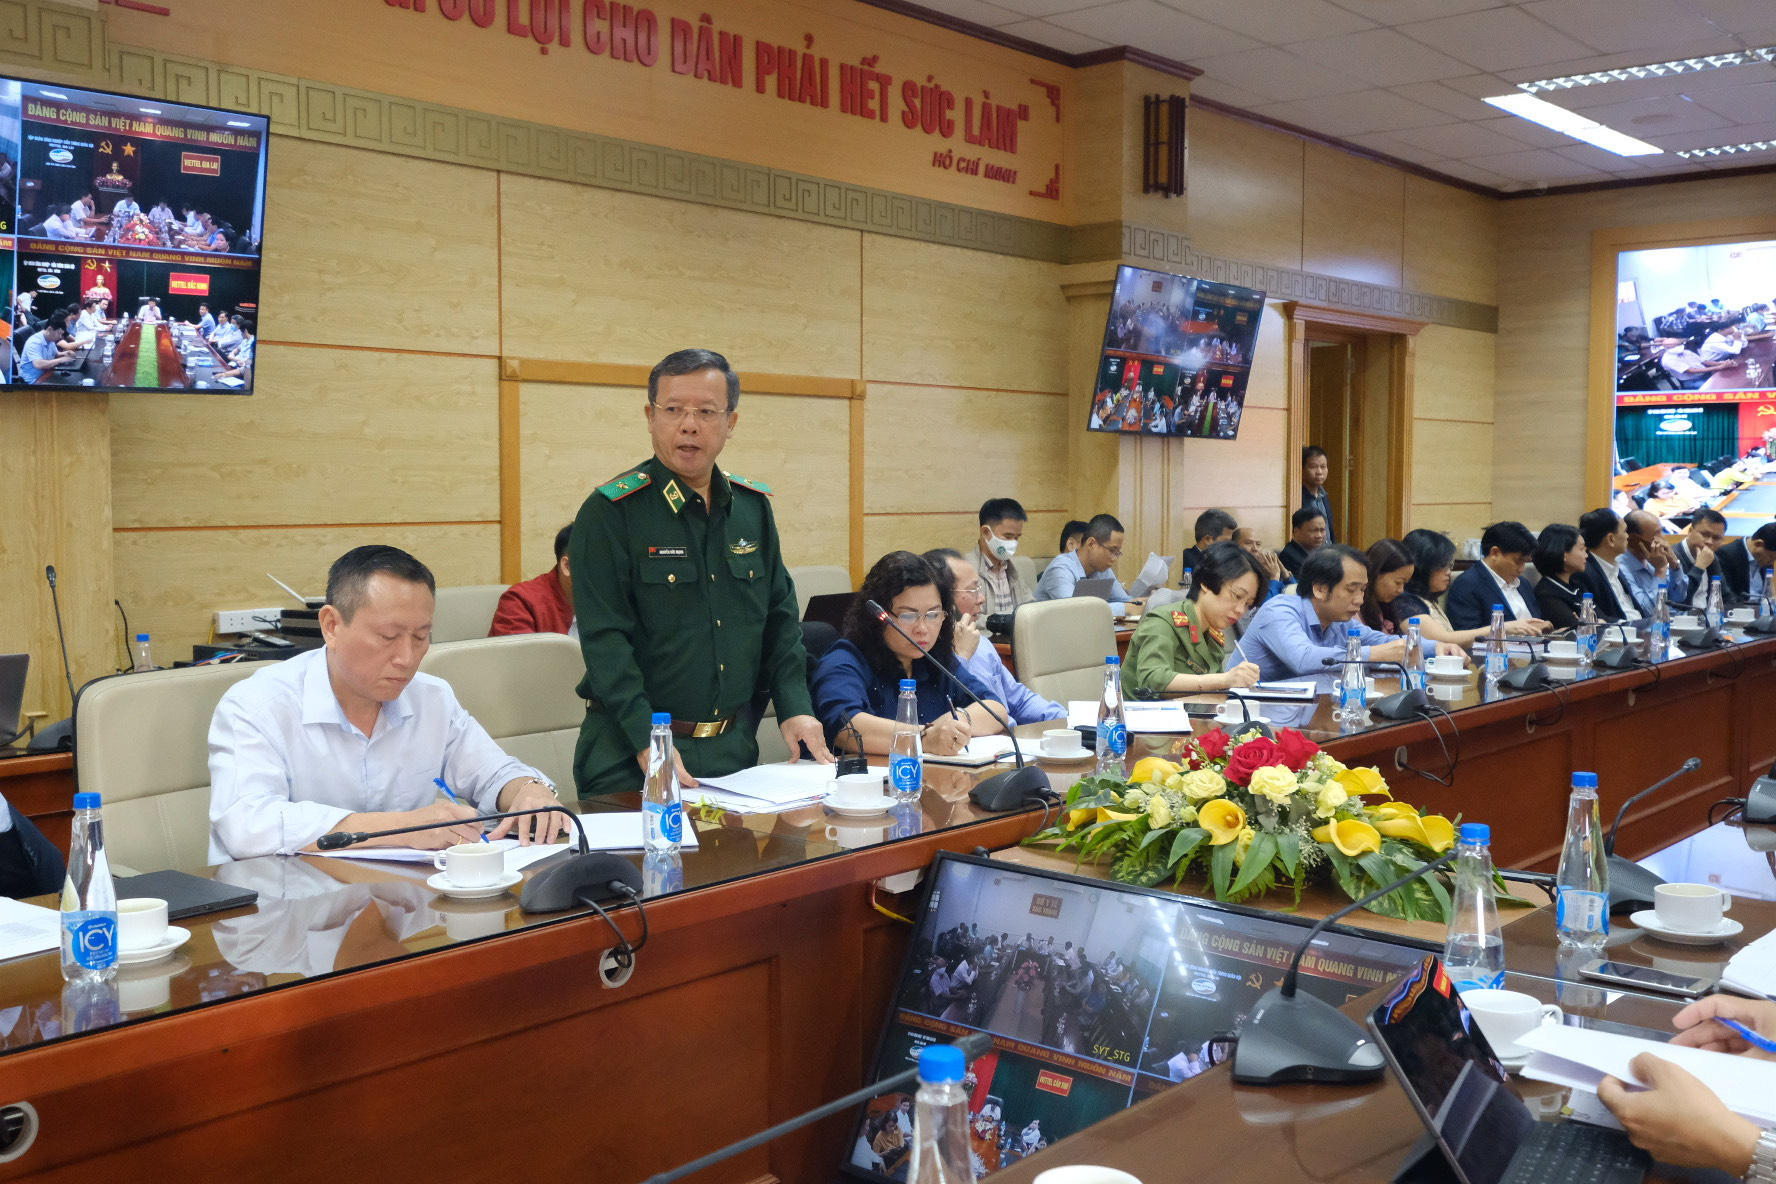 Over 20,000 border jumpers detected in Vietnam since beginning of 2020: deputy commander